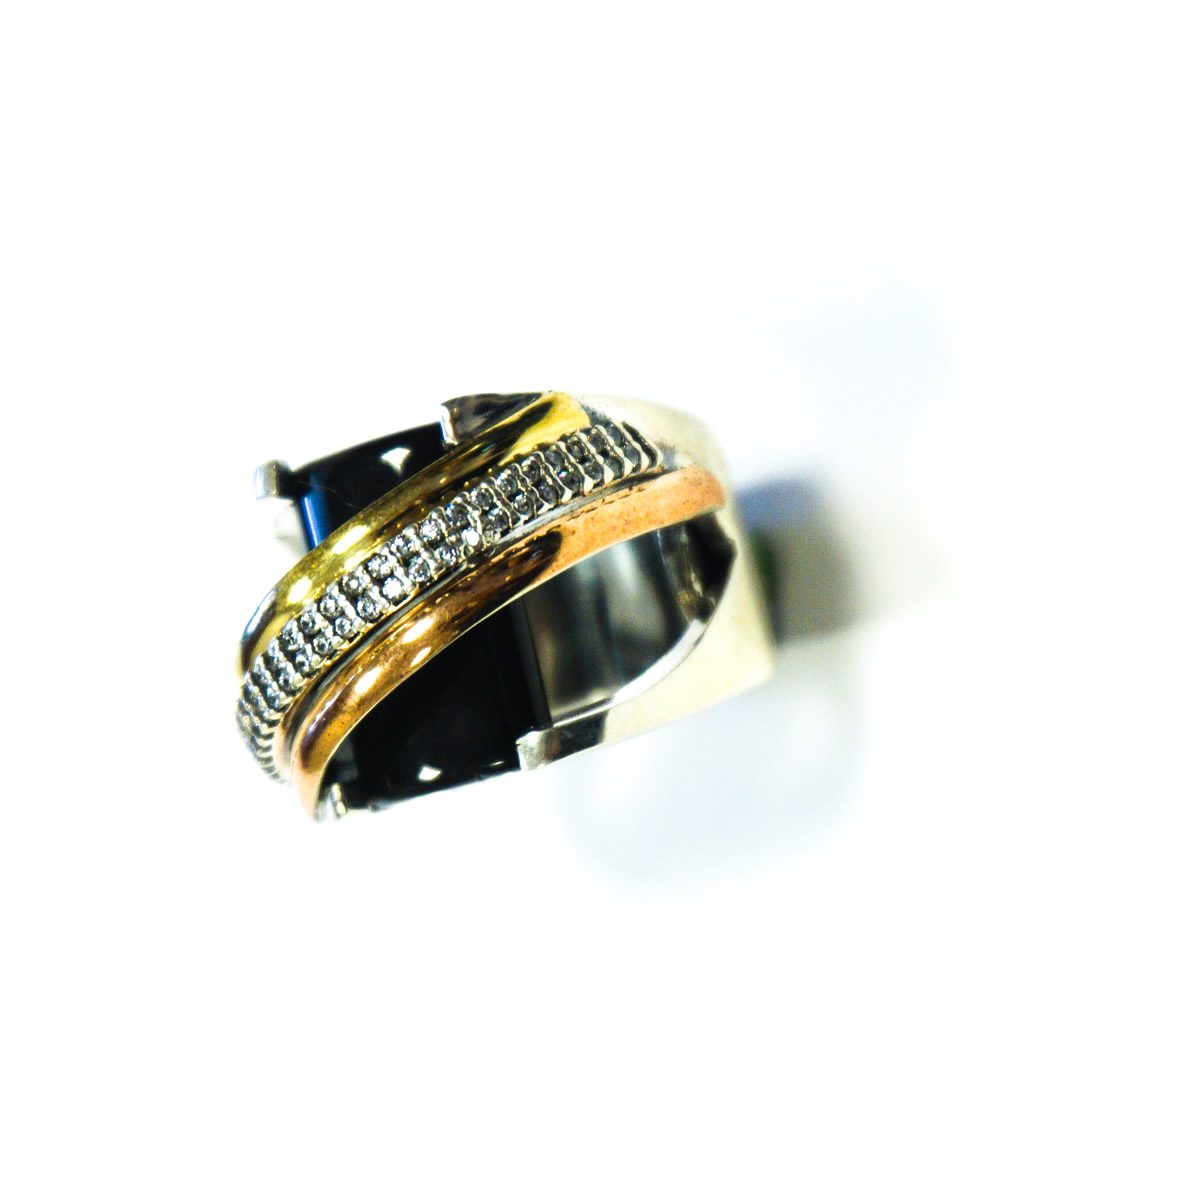 Elegant Sterling Silver 9.25 Ring with Goldtone Plating